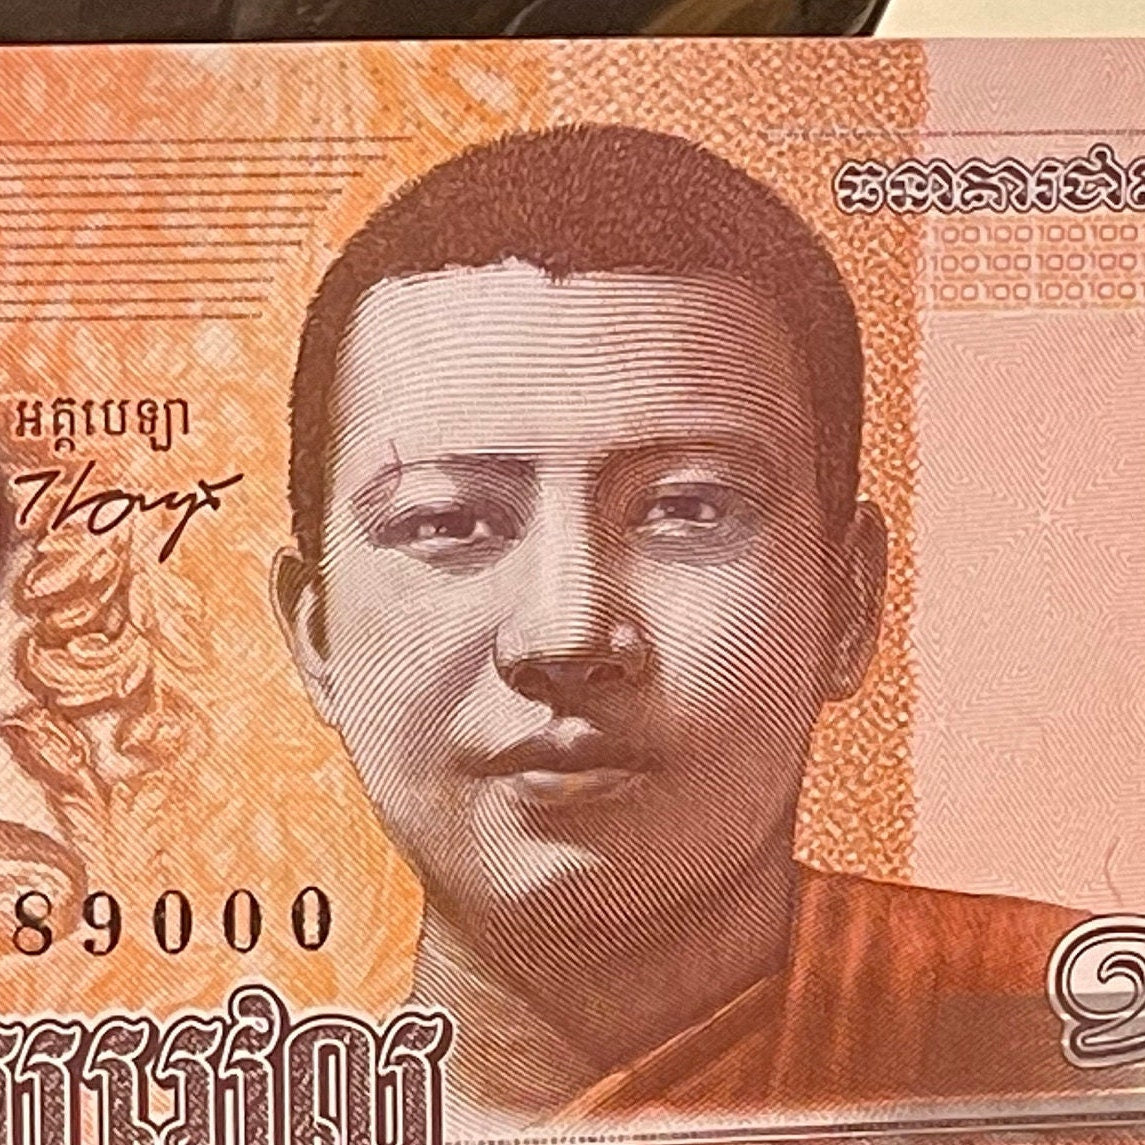 King Father Norodom Sihanouk, Silver Pagoda, Lokesvara, Maitreya, Naga 100 Riels Cambodia Authentic Banknote Money for Collage 2014 Buddhism